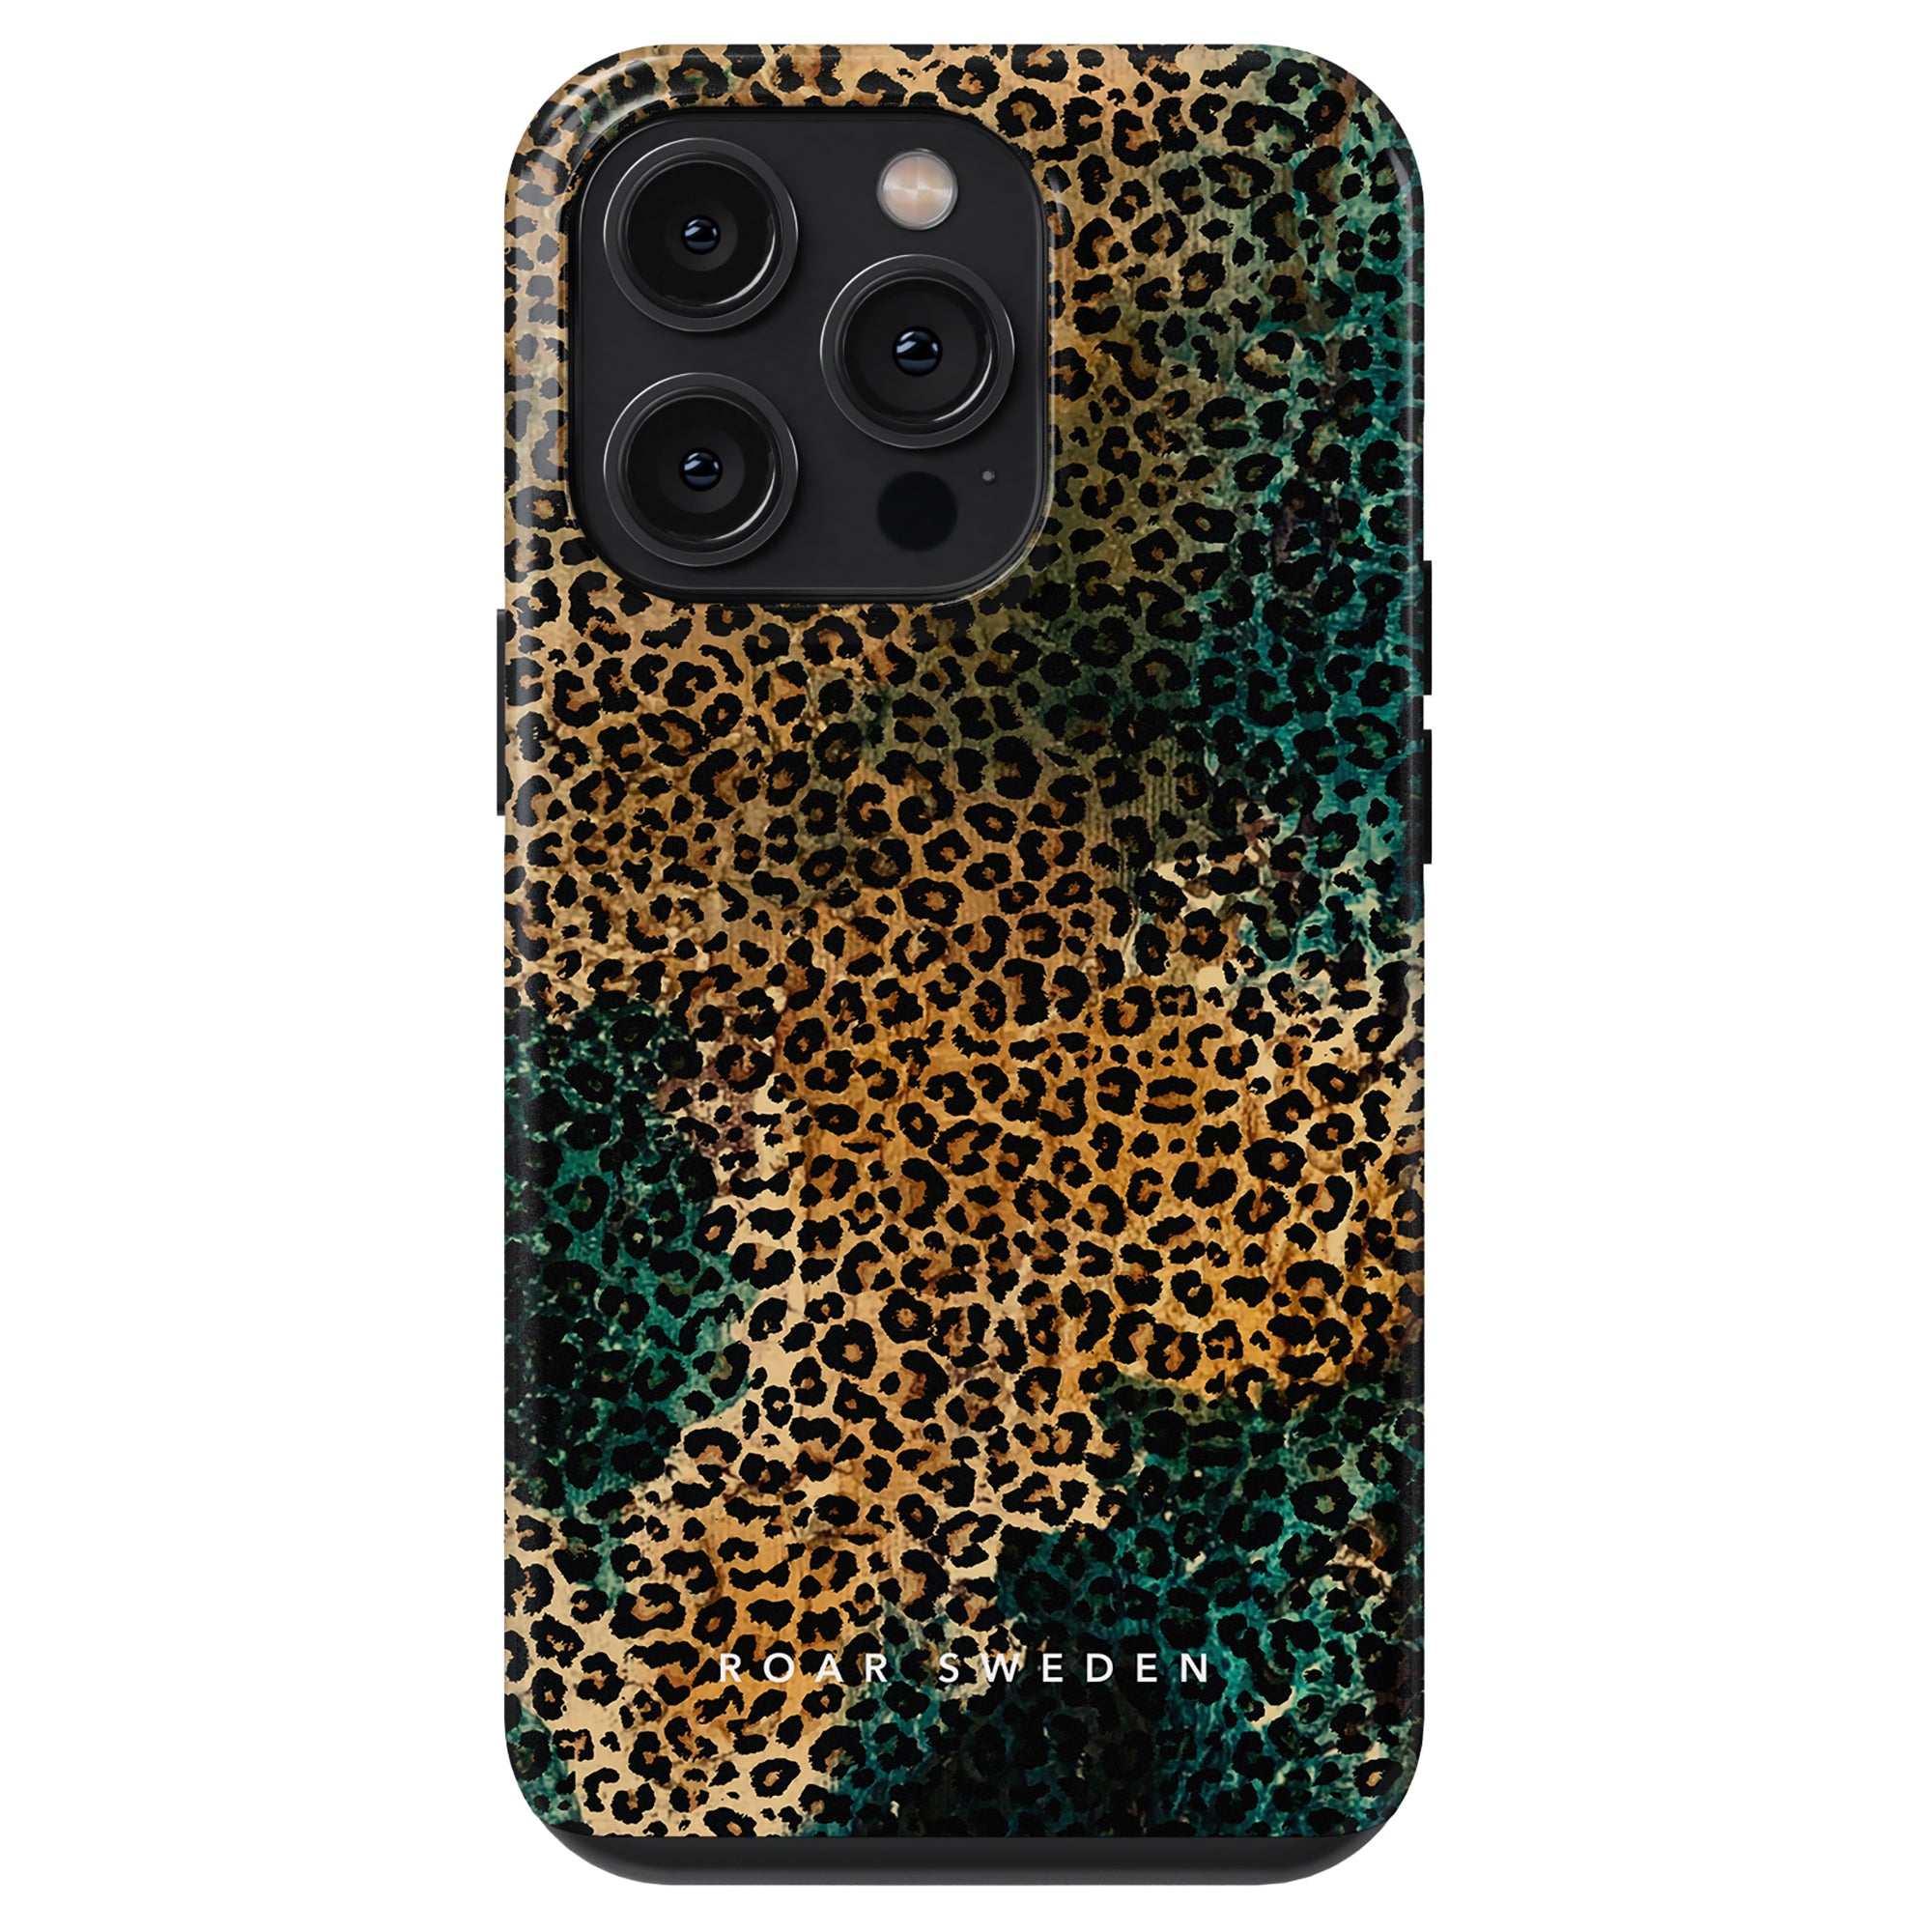 A Wildcat - Tufft fodral för iPhone 11 med leopardmönsterdesign.